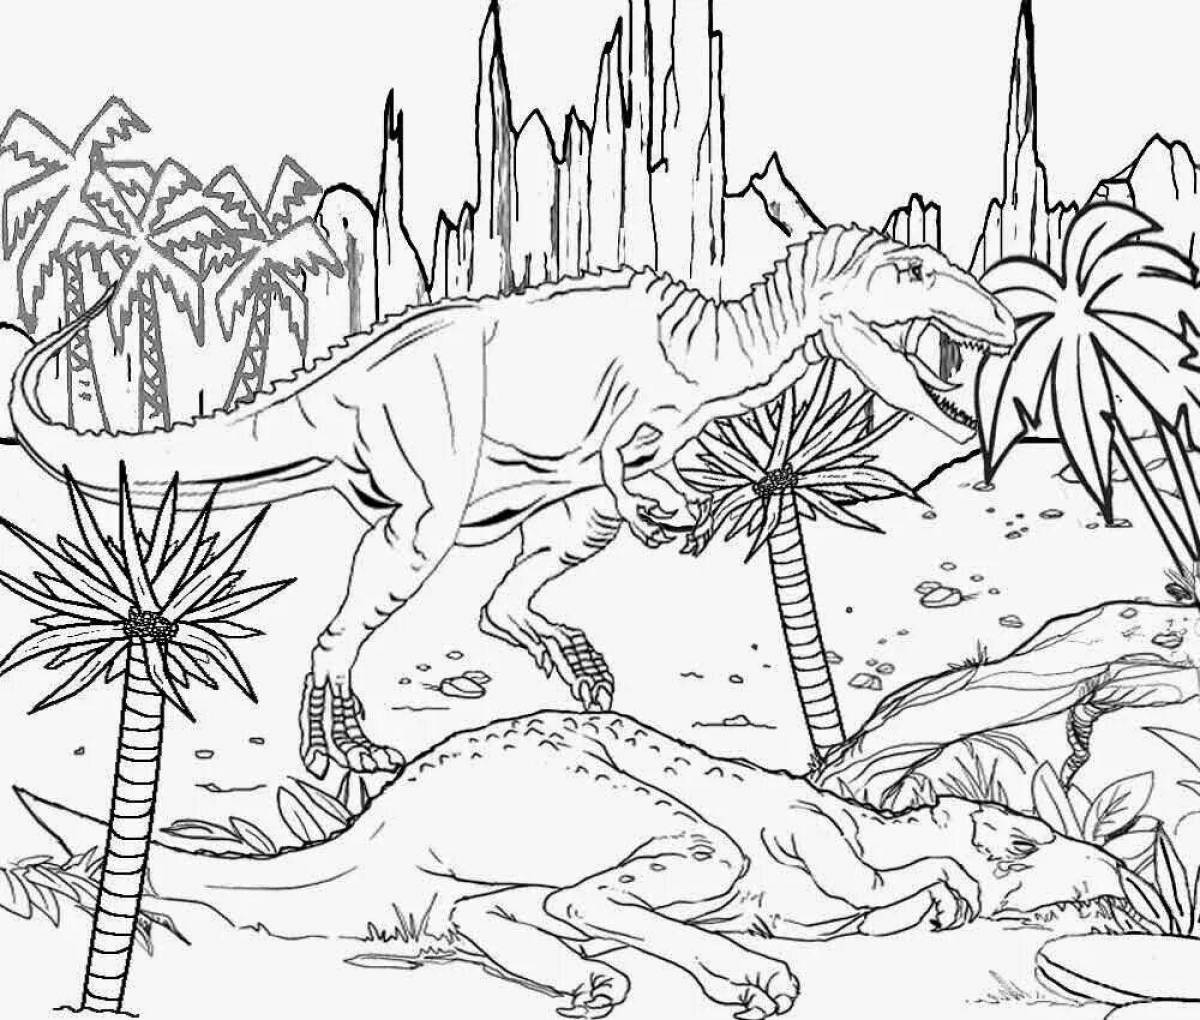 Dinosaurs jurassic world #3